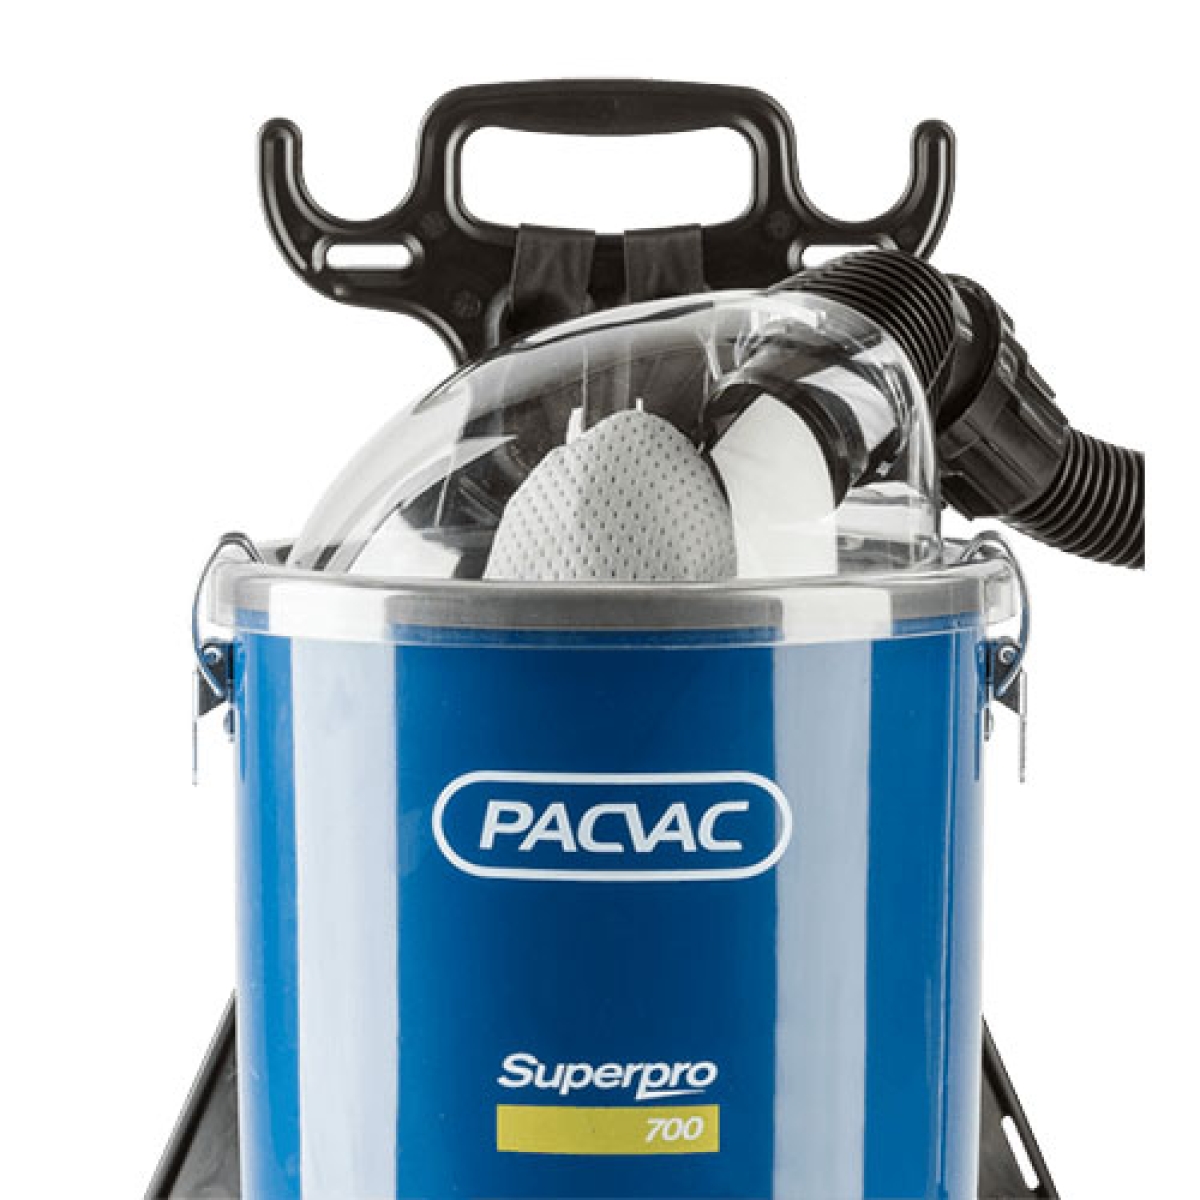 PacVac Superpro 700 Back Pack Vacuum